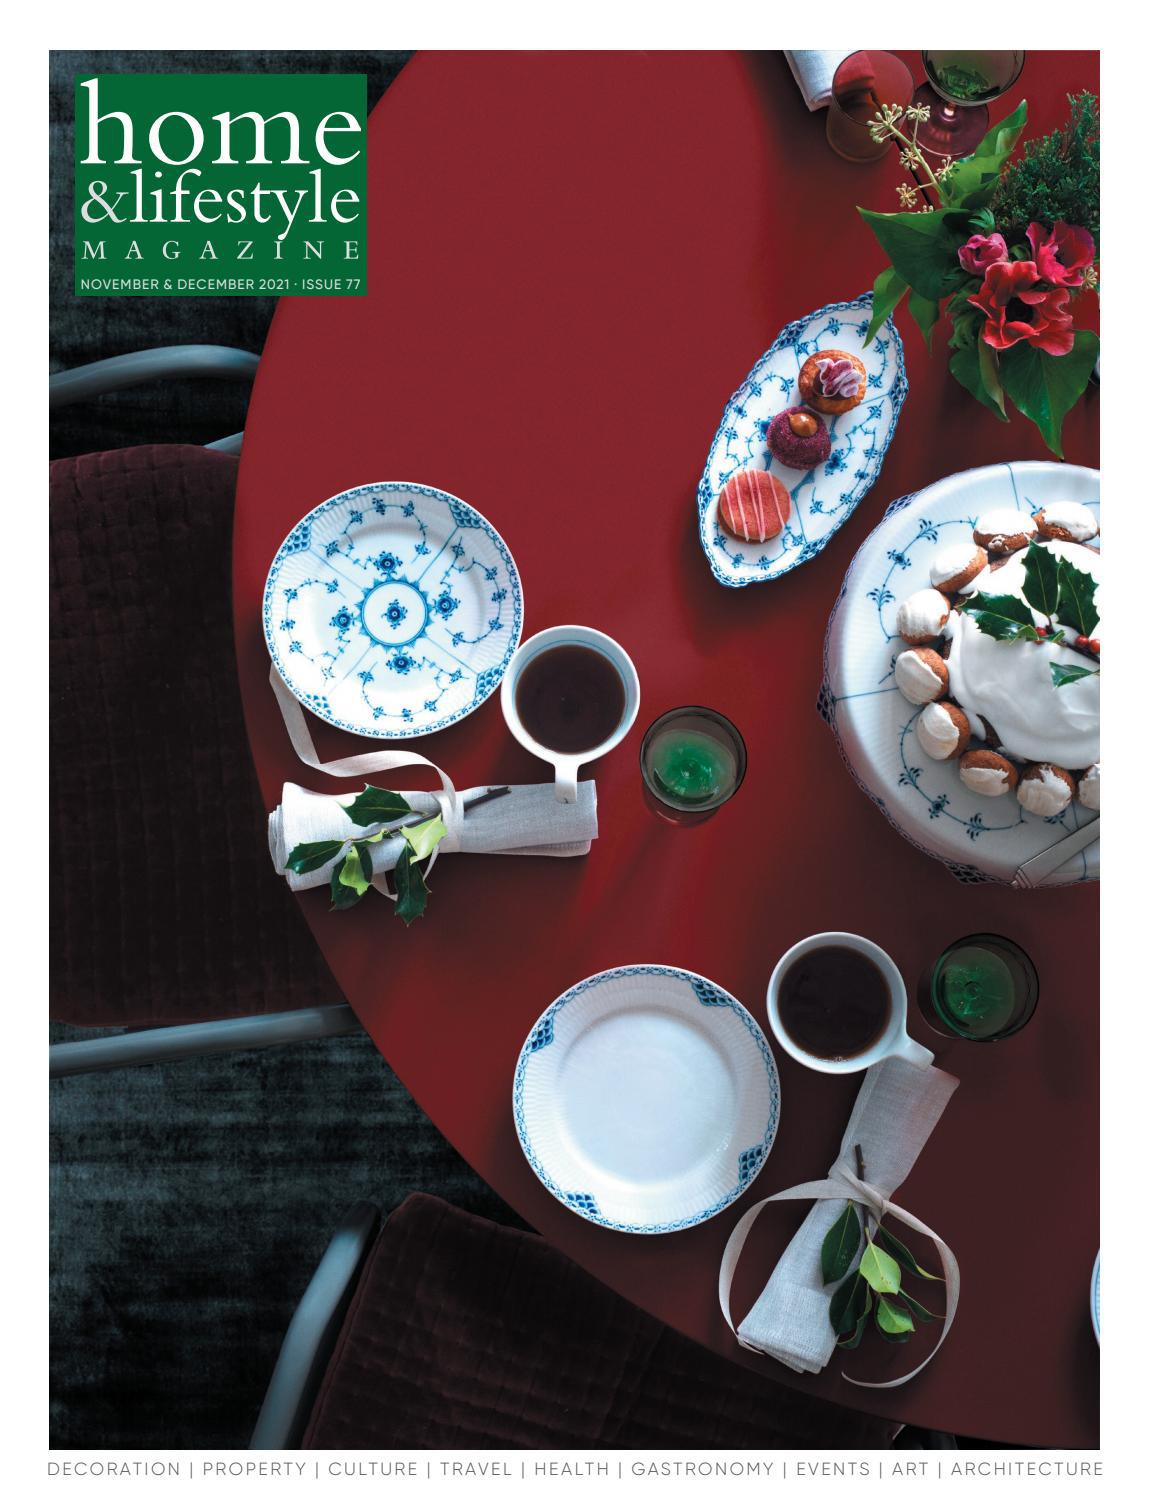 Home & Lifestyle Magazine (November / December 2021)